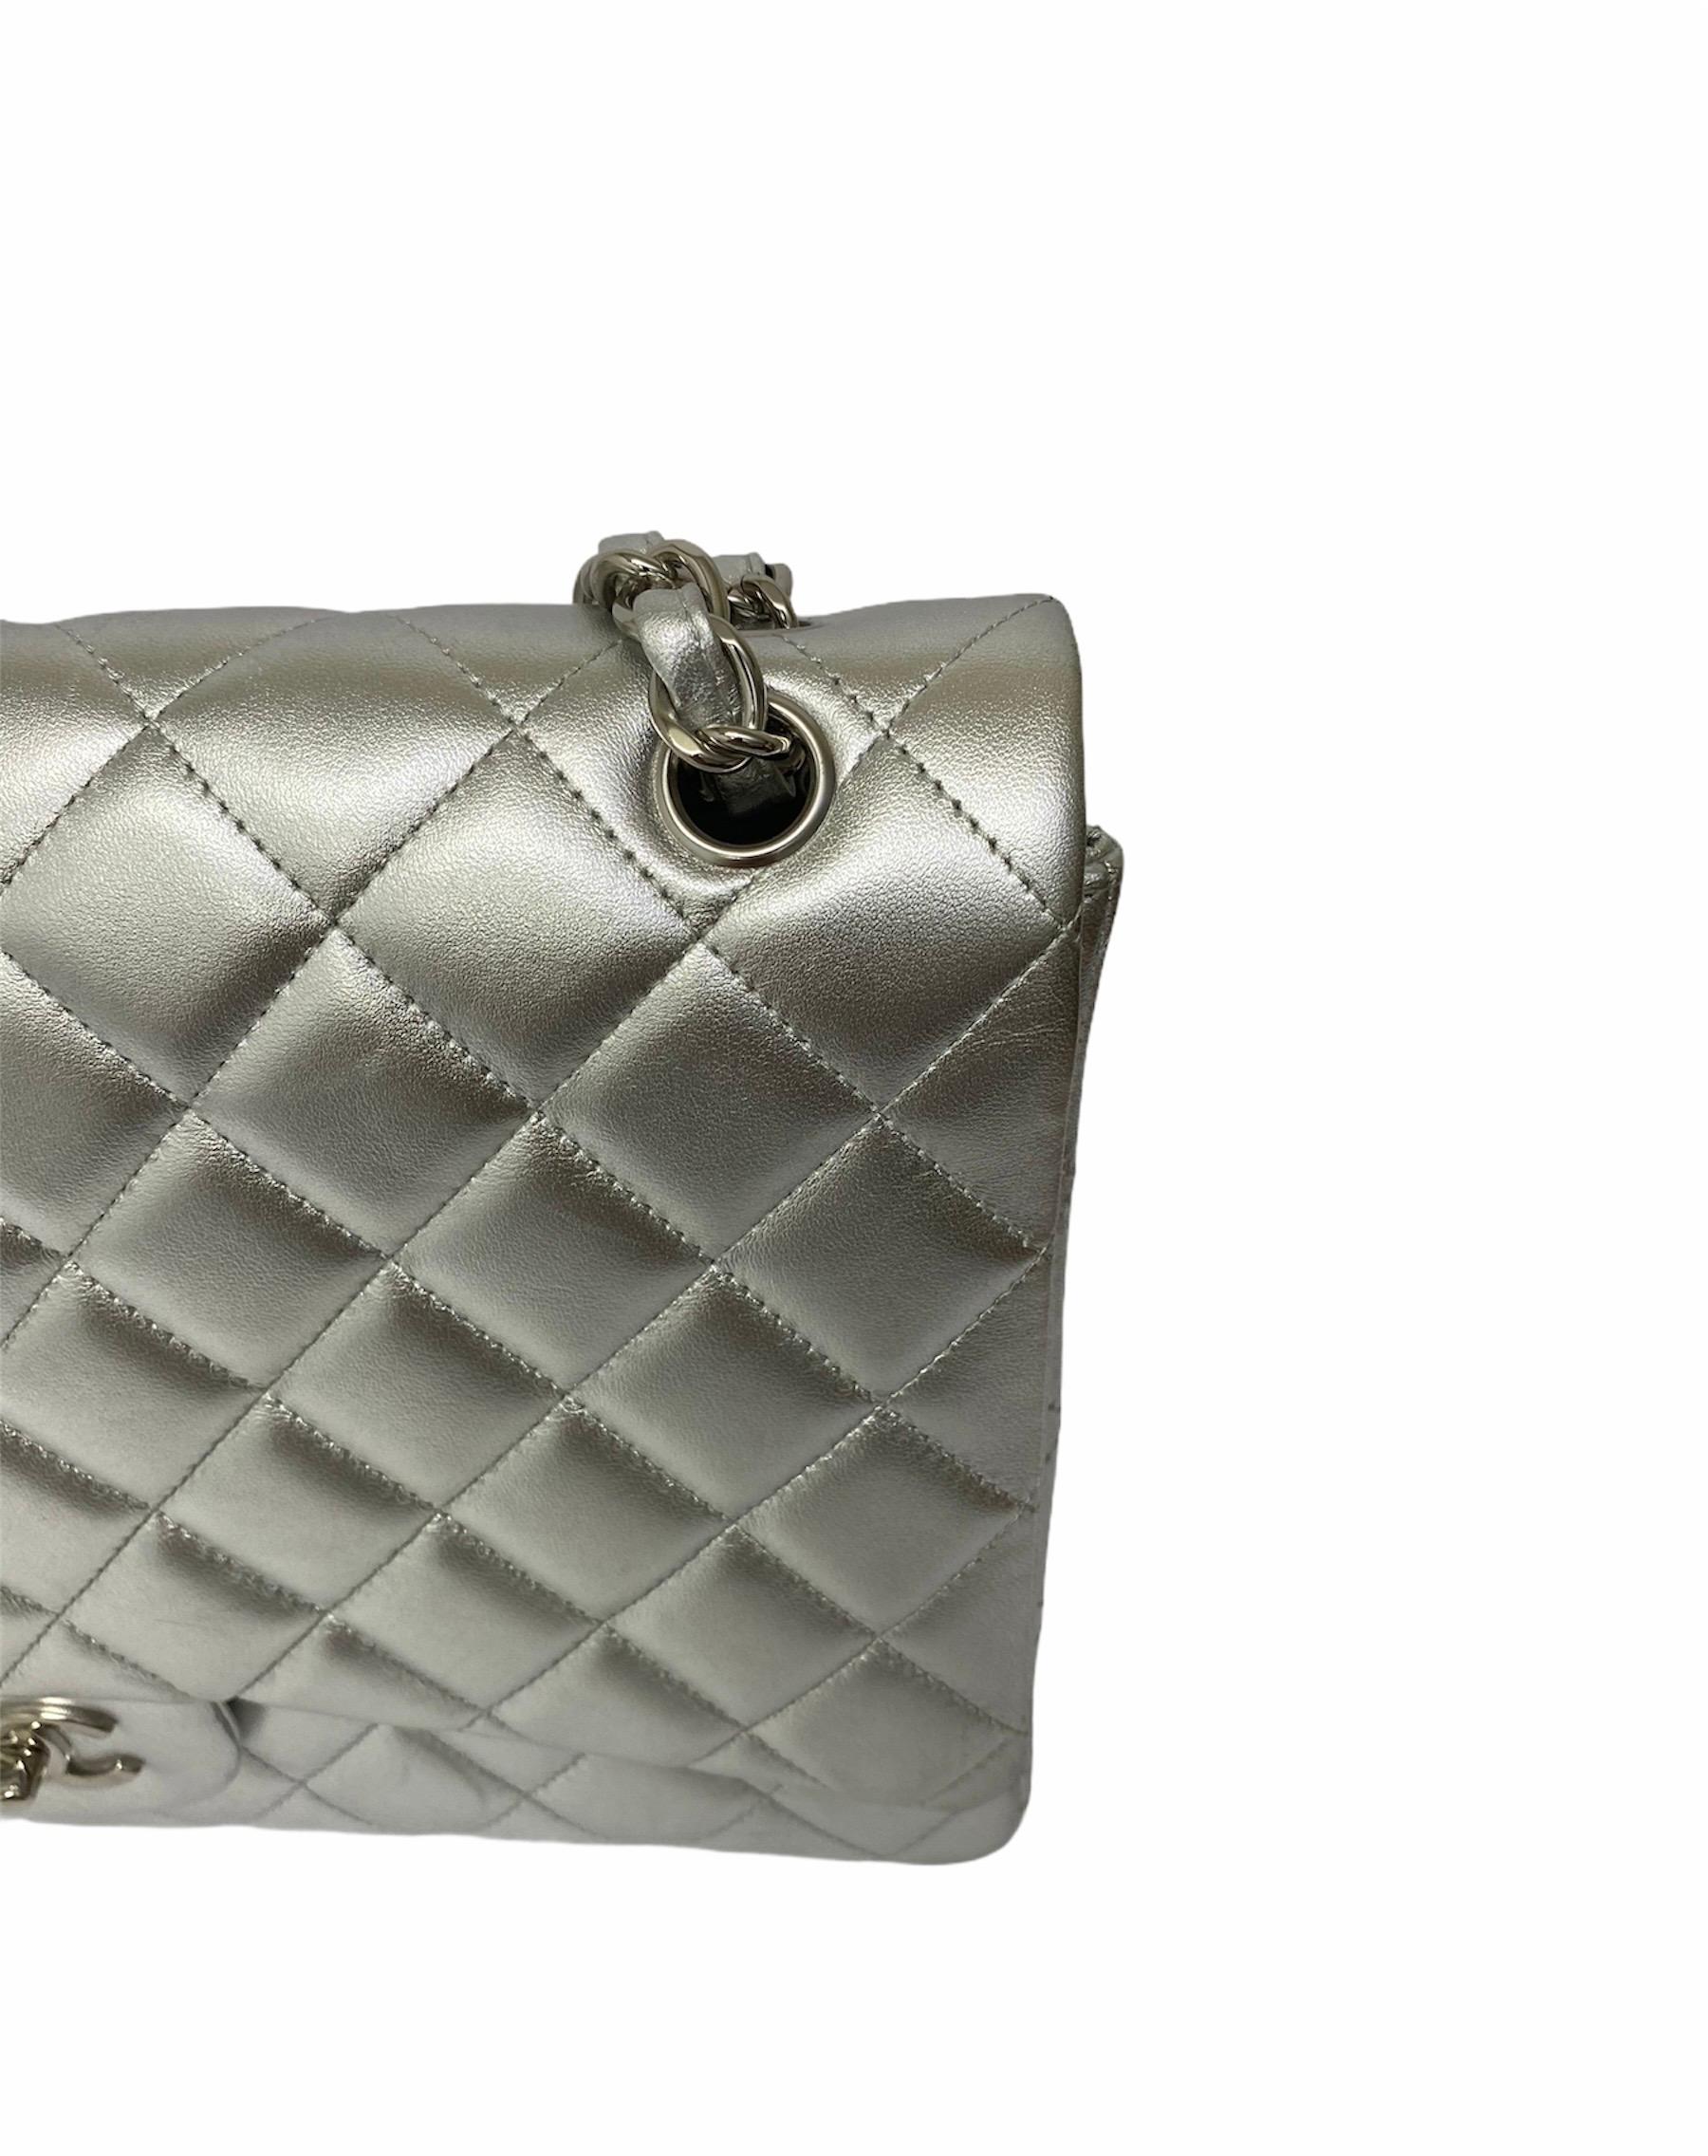 Chanel Silver Leather Maxi Jumbo Bag  1